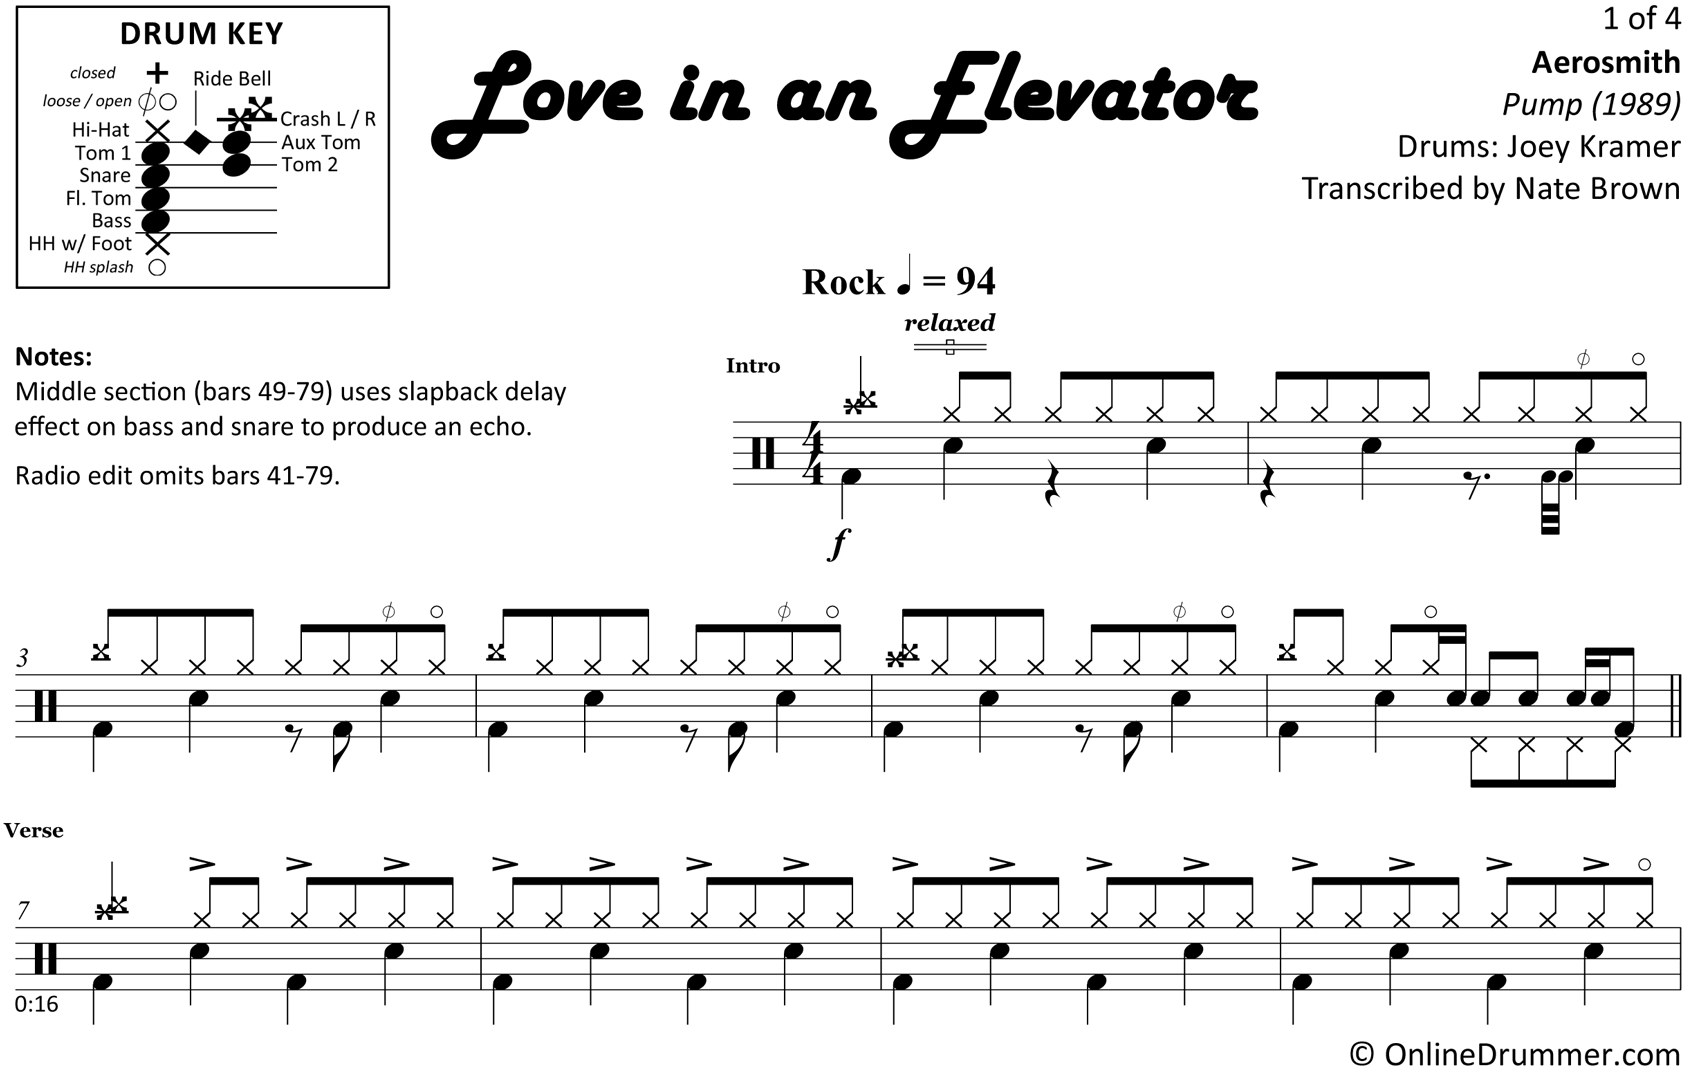 Love in an Elevator - Aerosmith - Drum Sheet Music